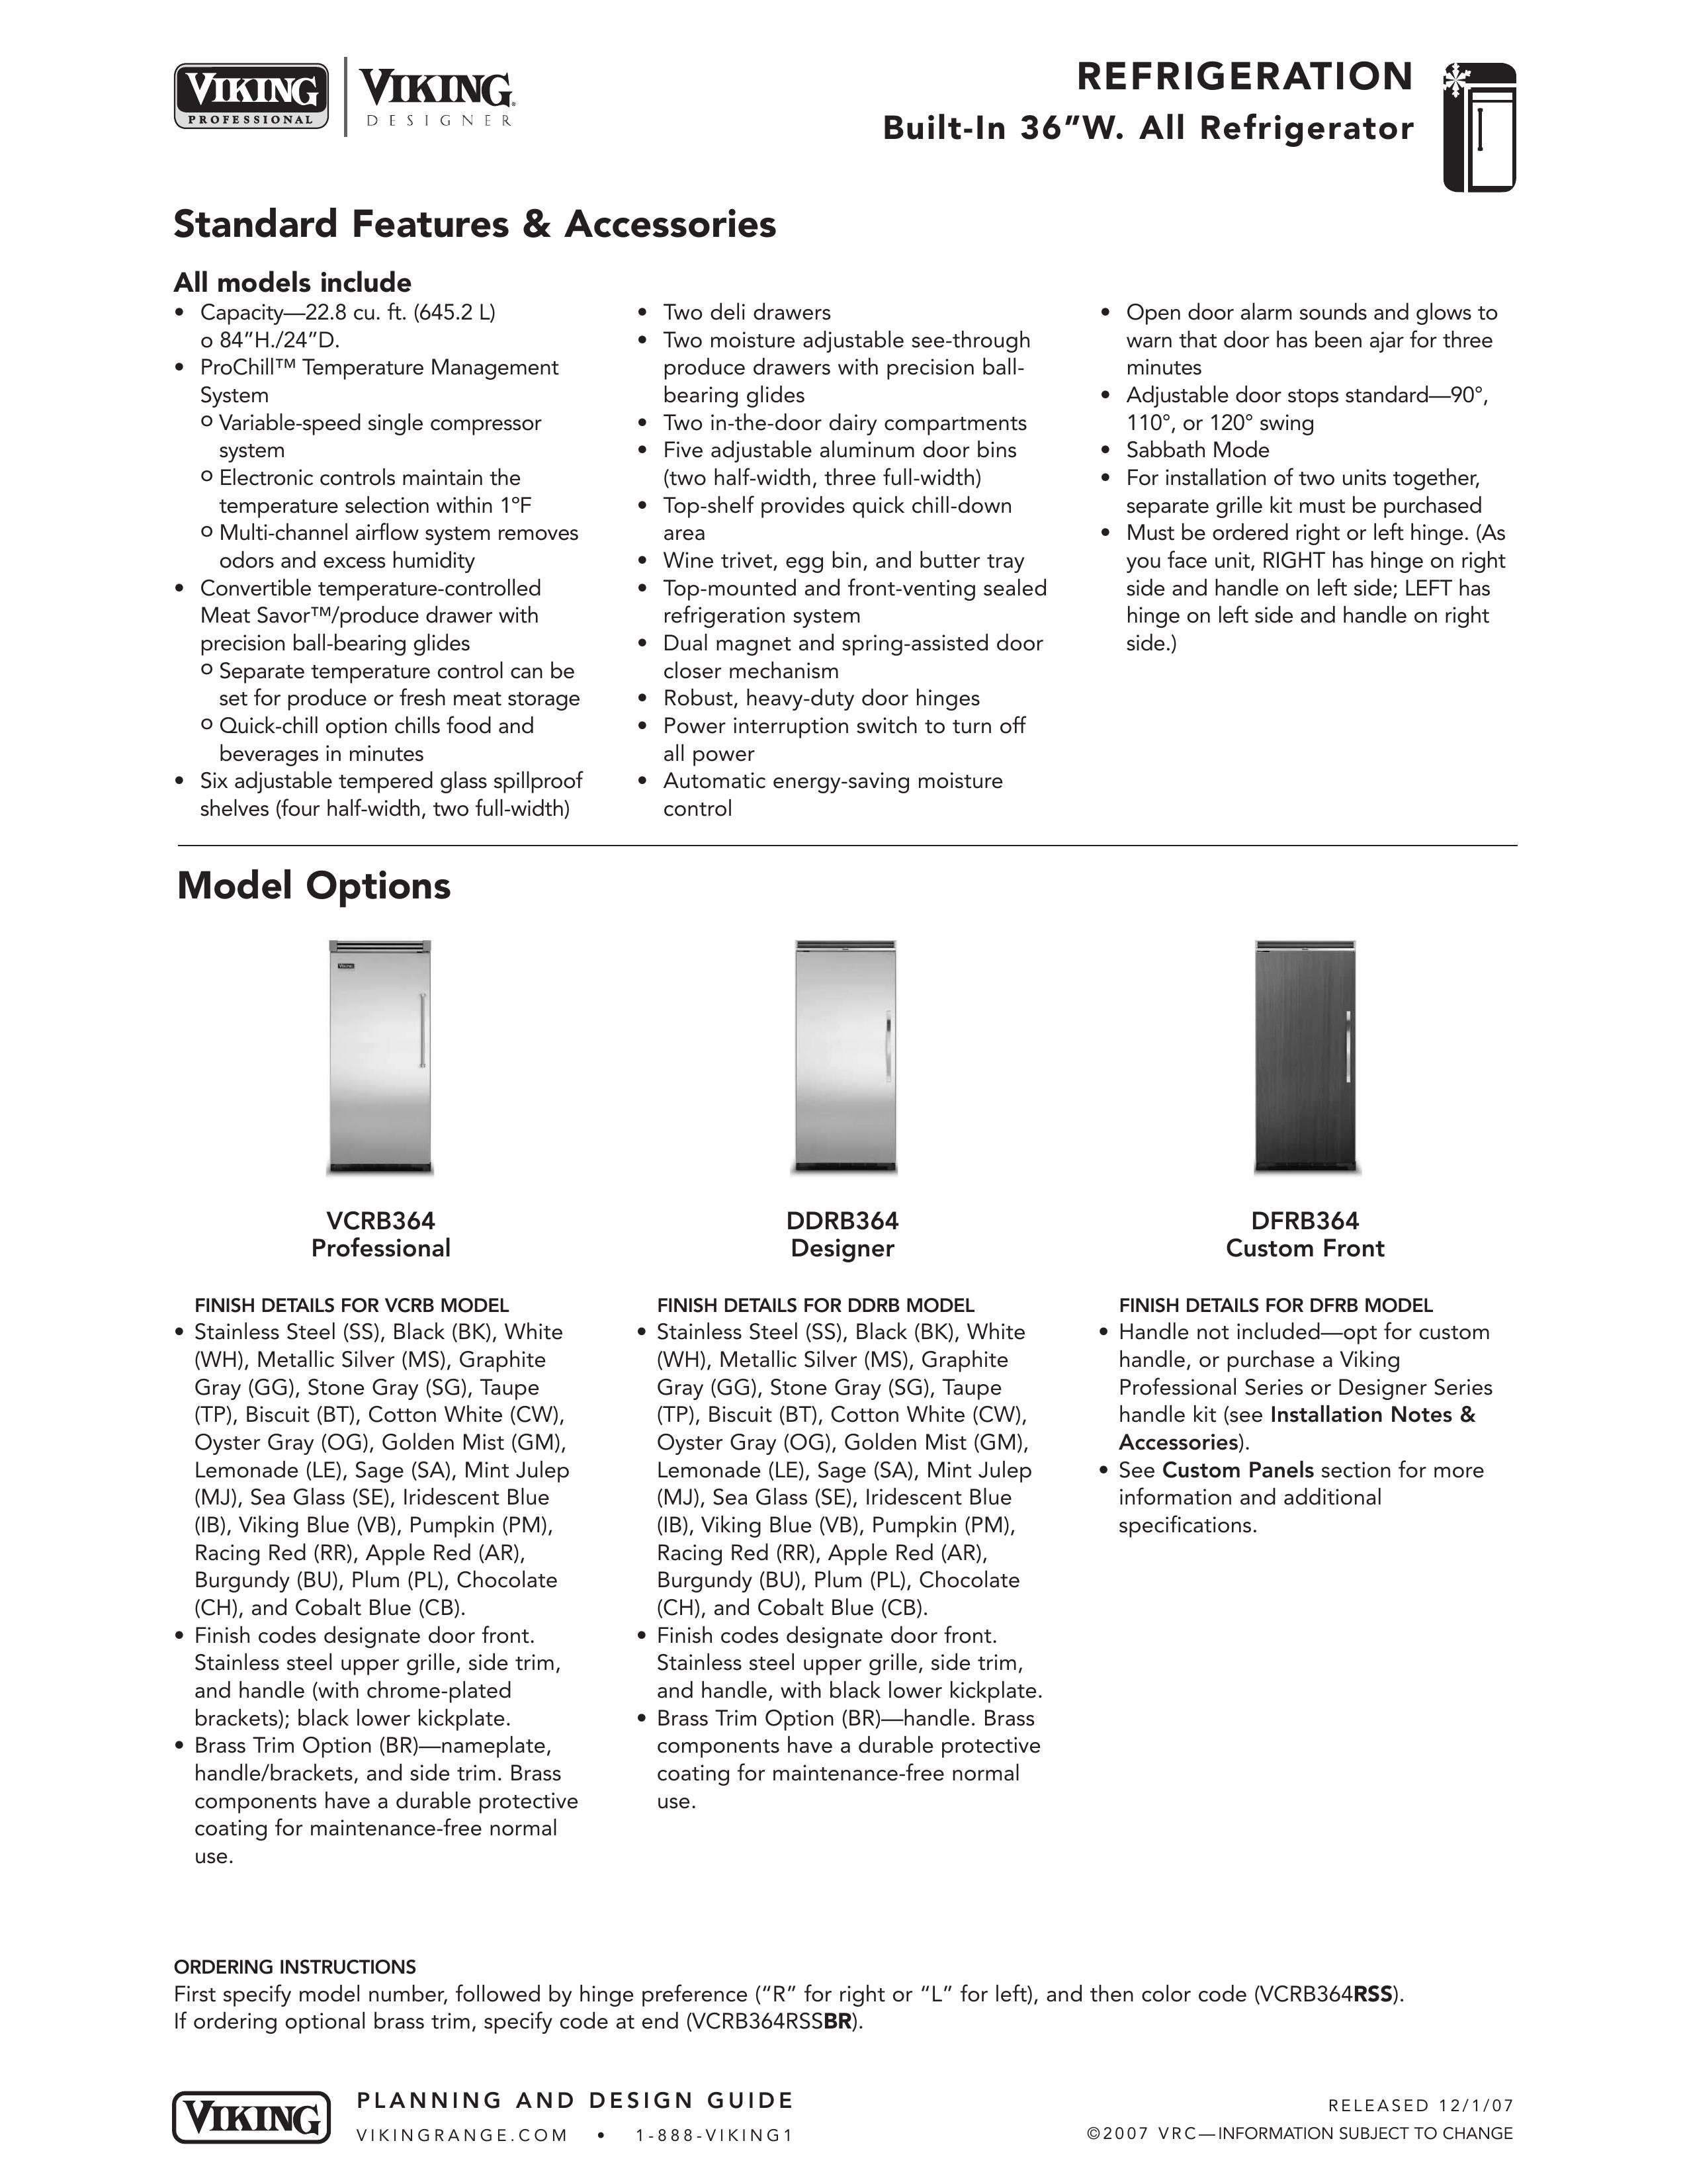 Viking DDRB364 Refrigerator User Manual